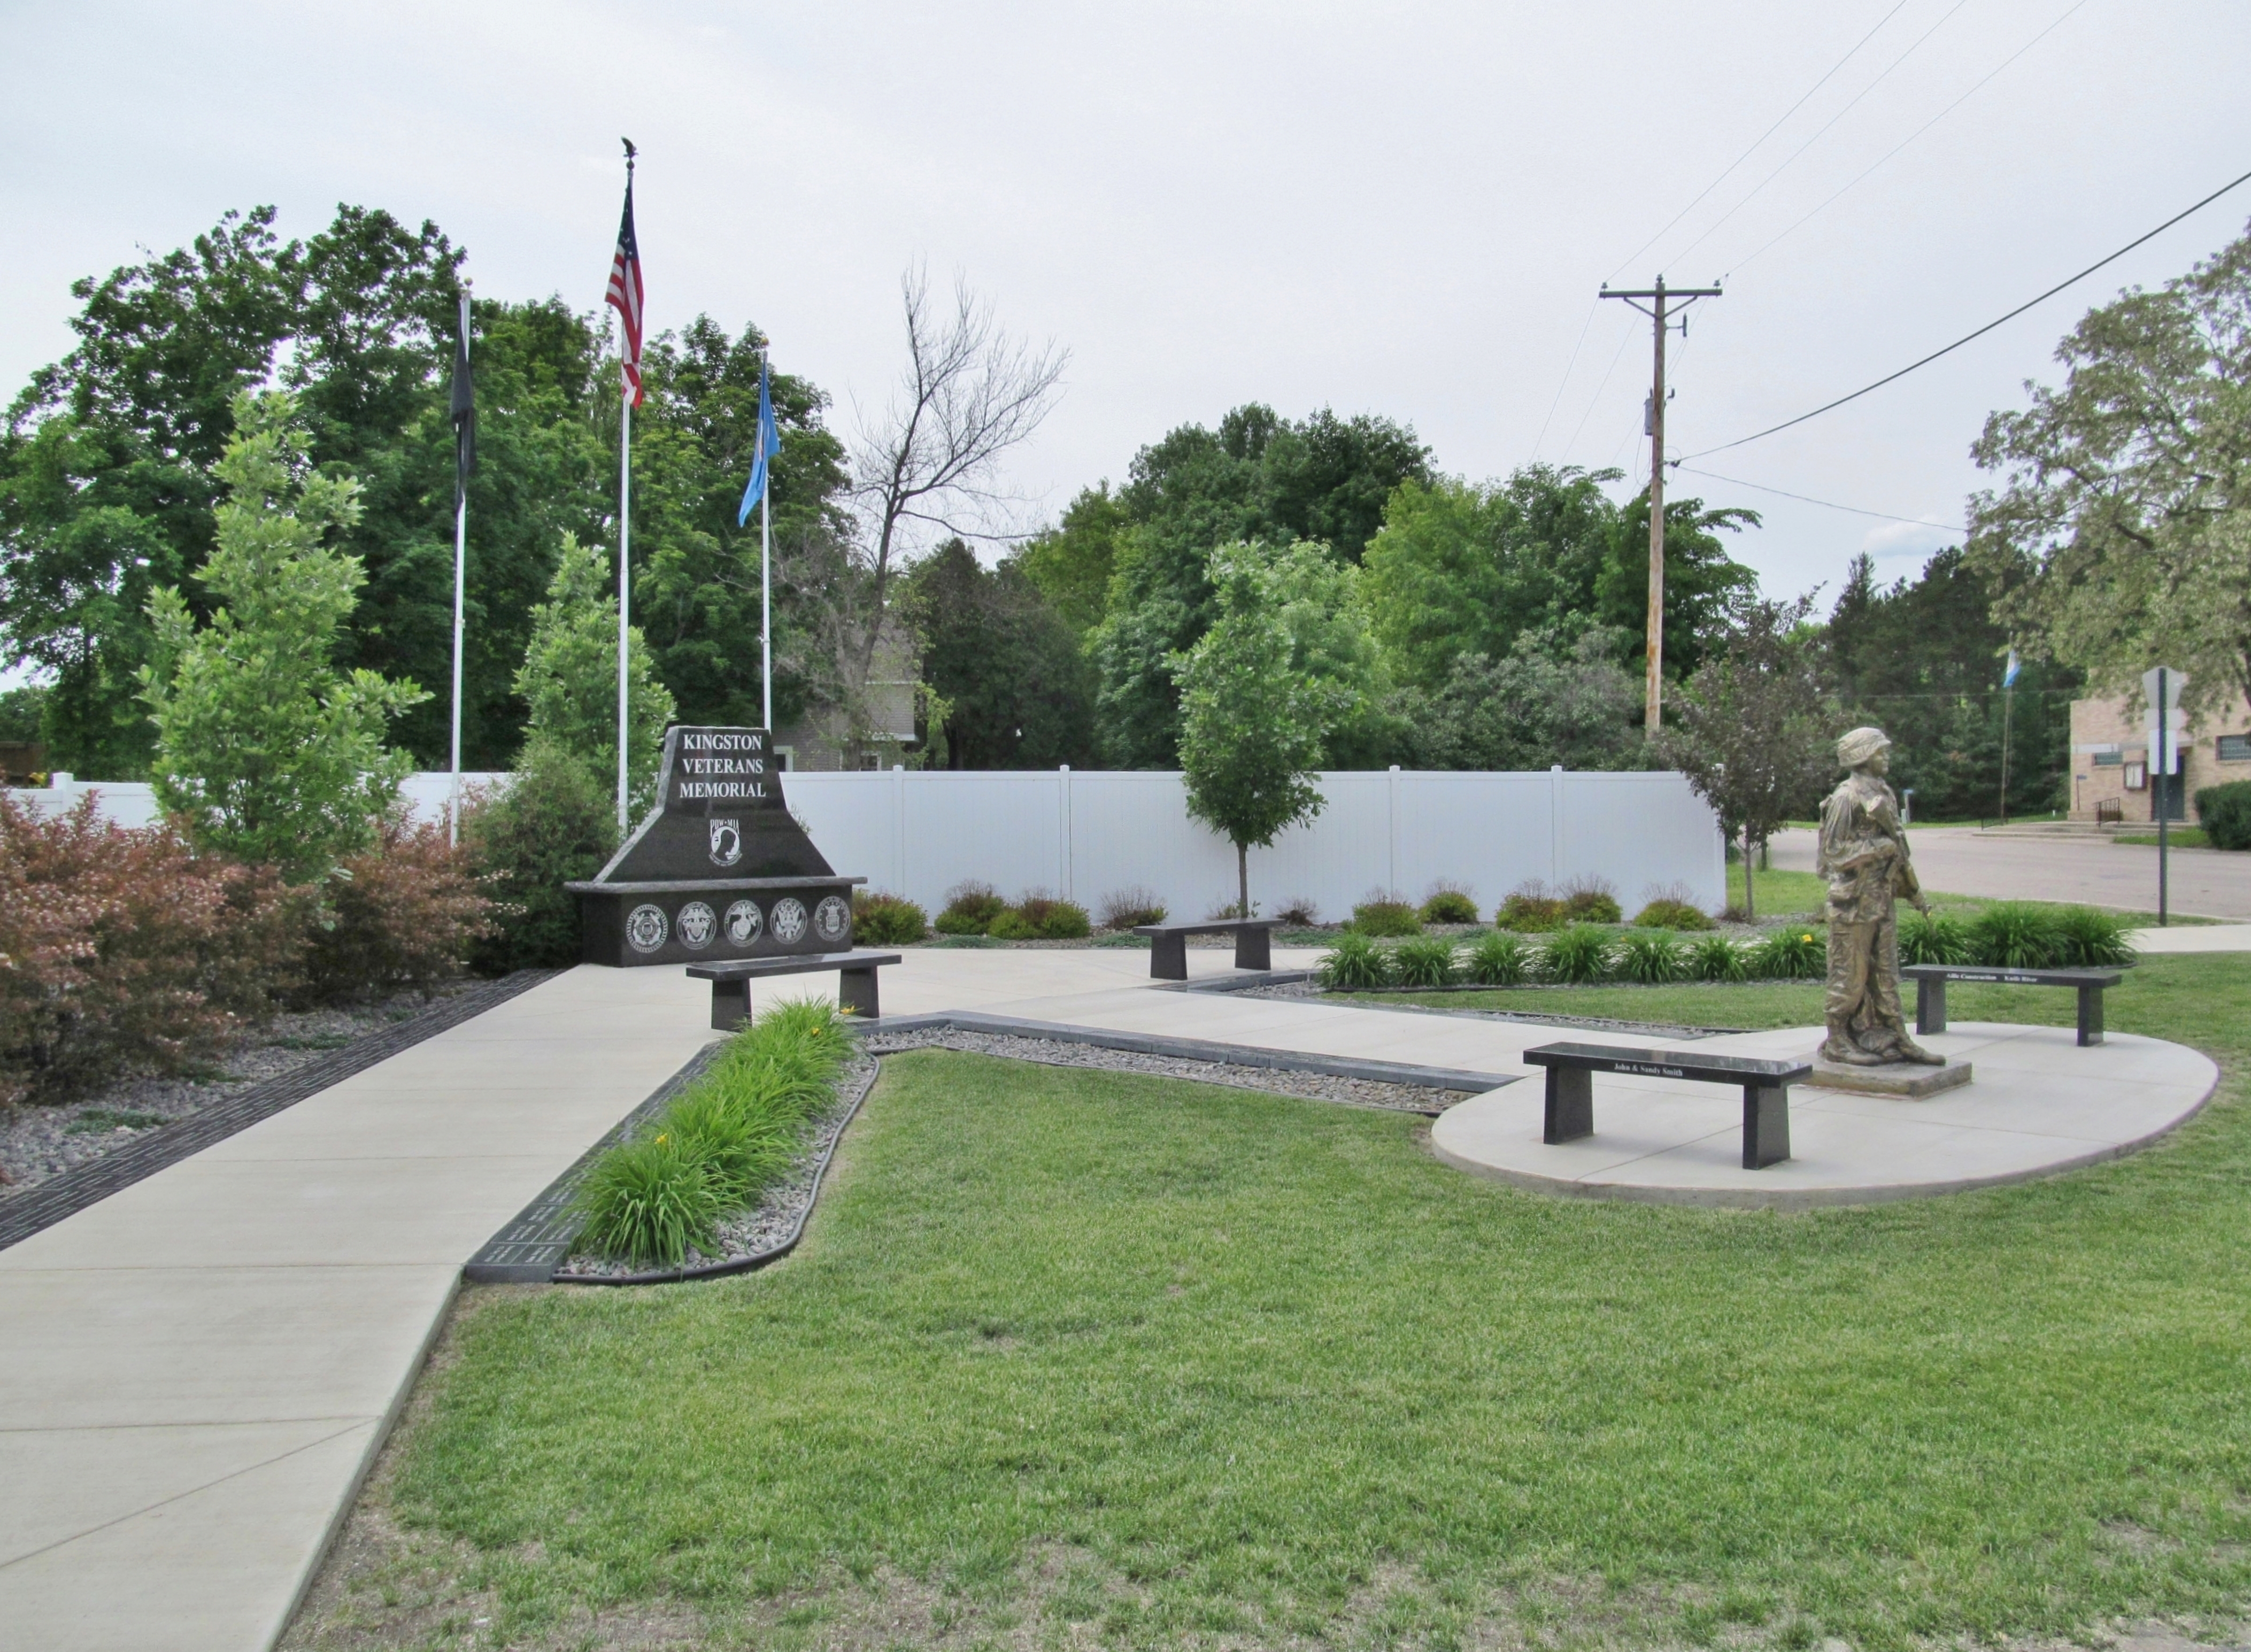 Kingston Veterans Memorial